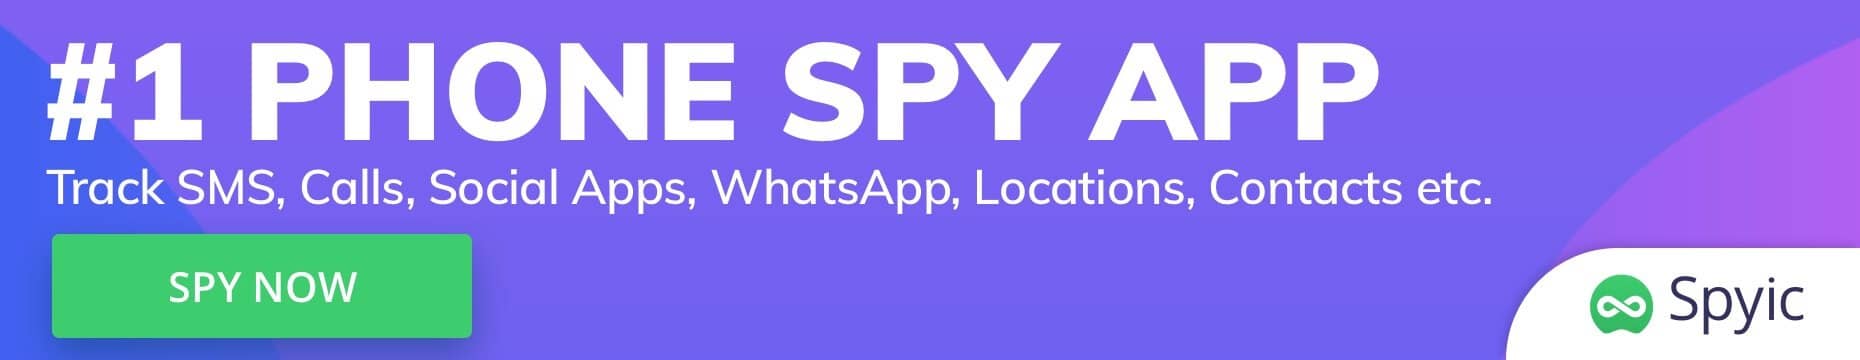 phone-spy-spyic-banner